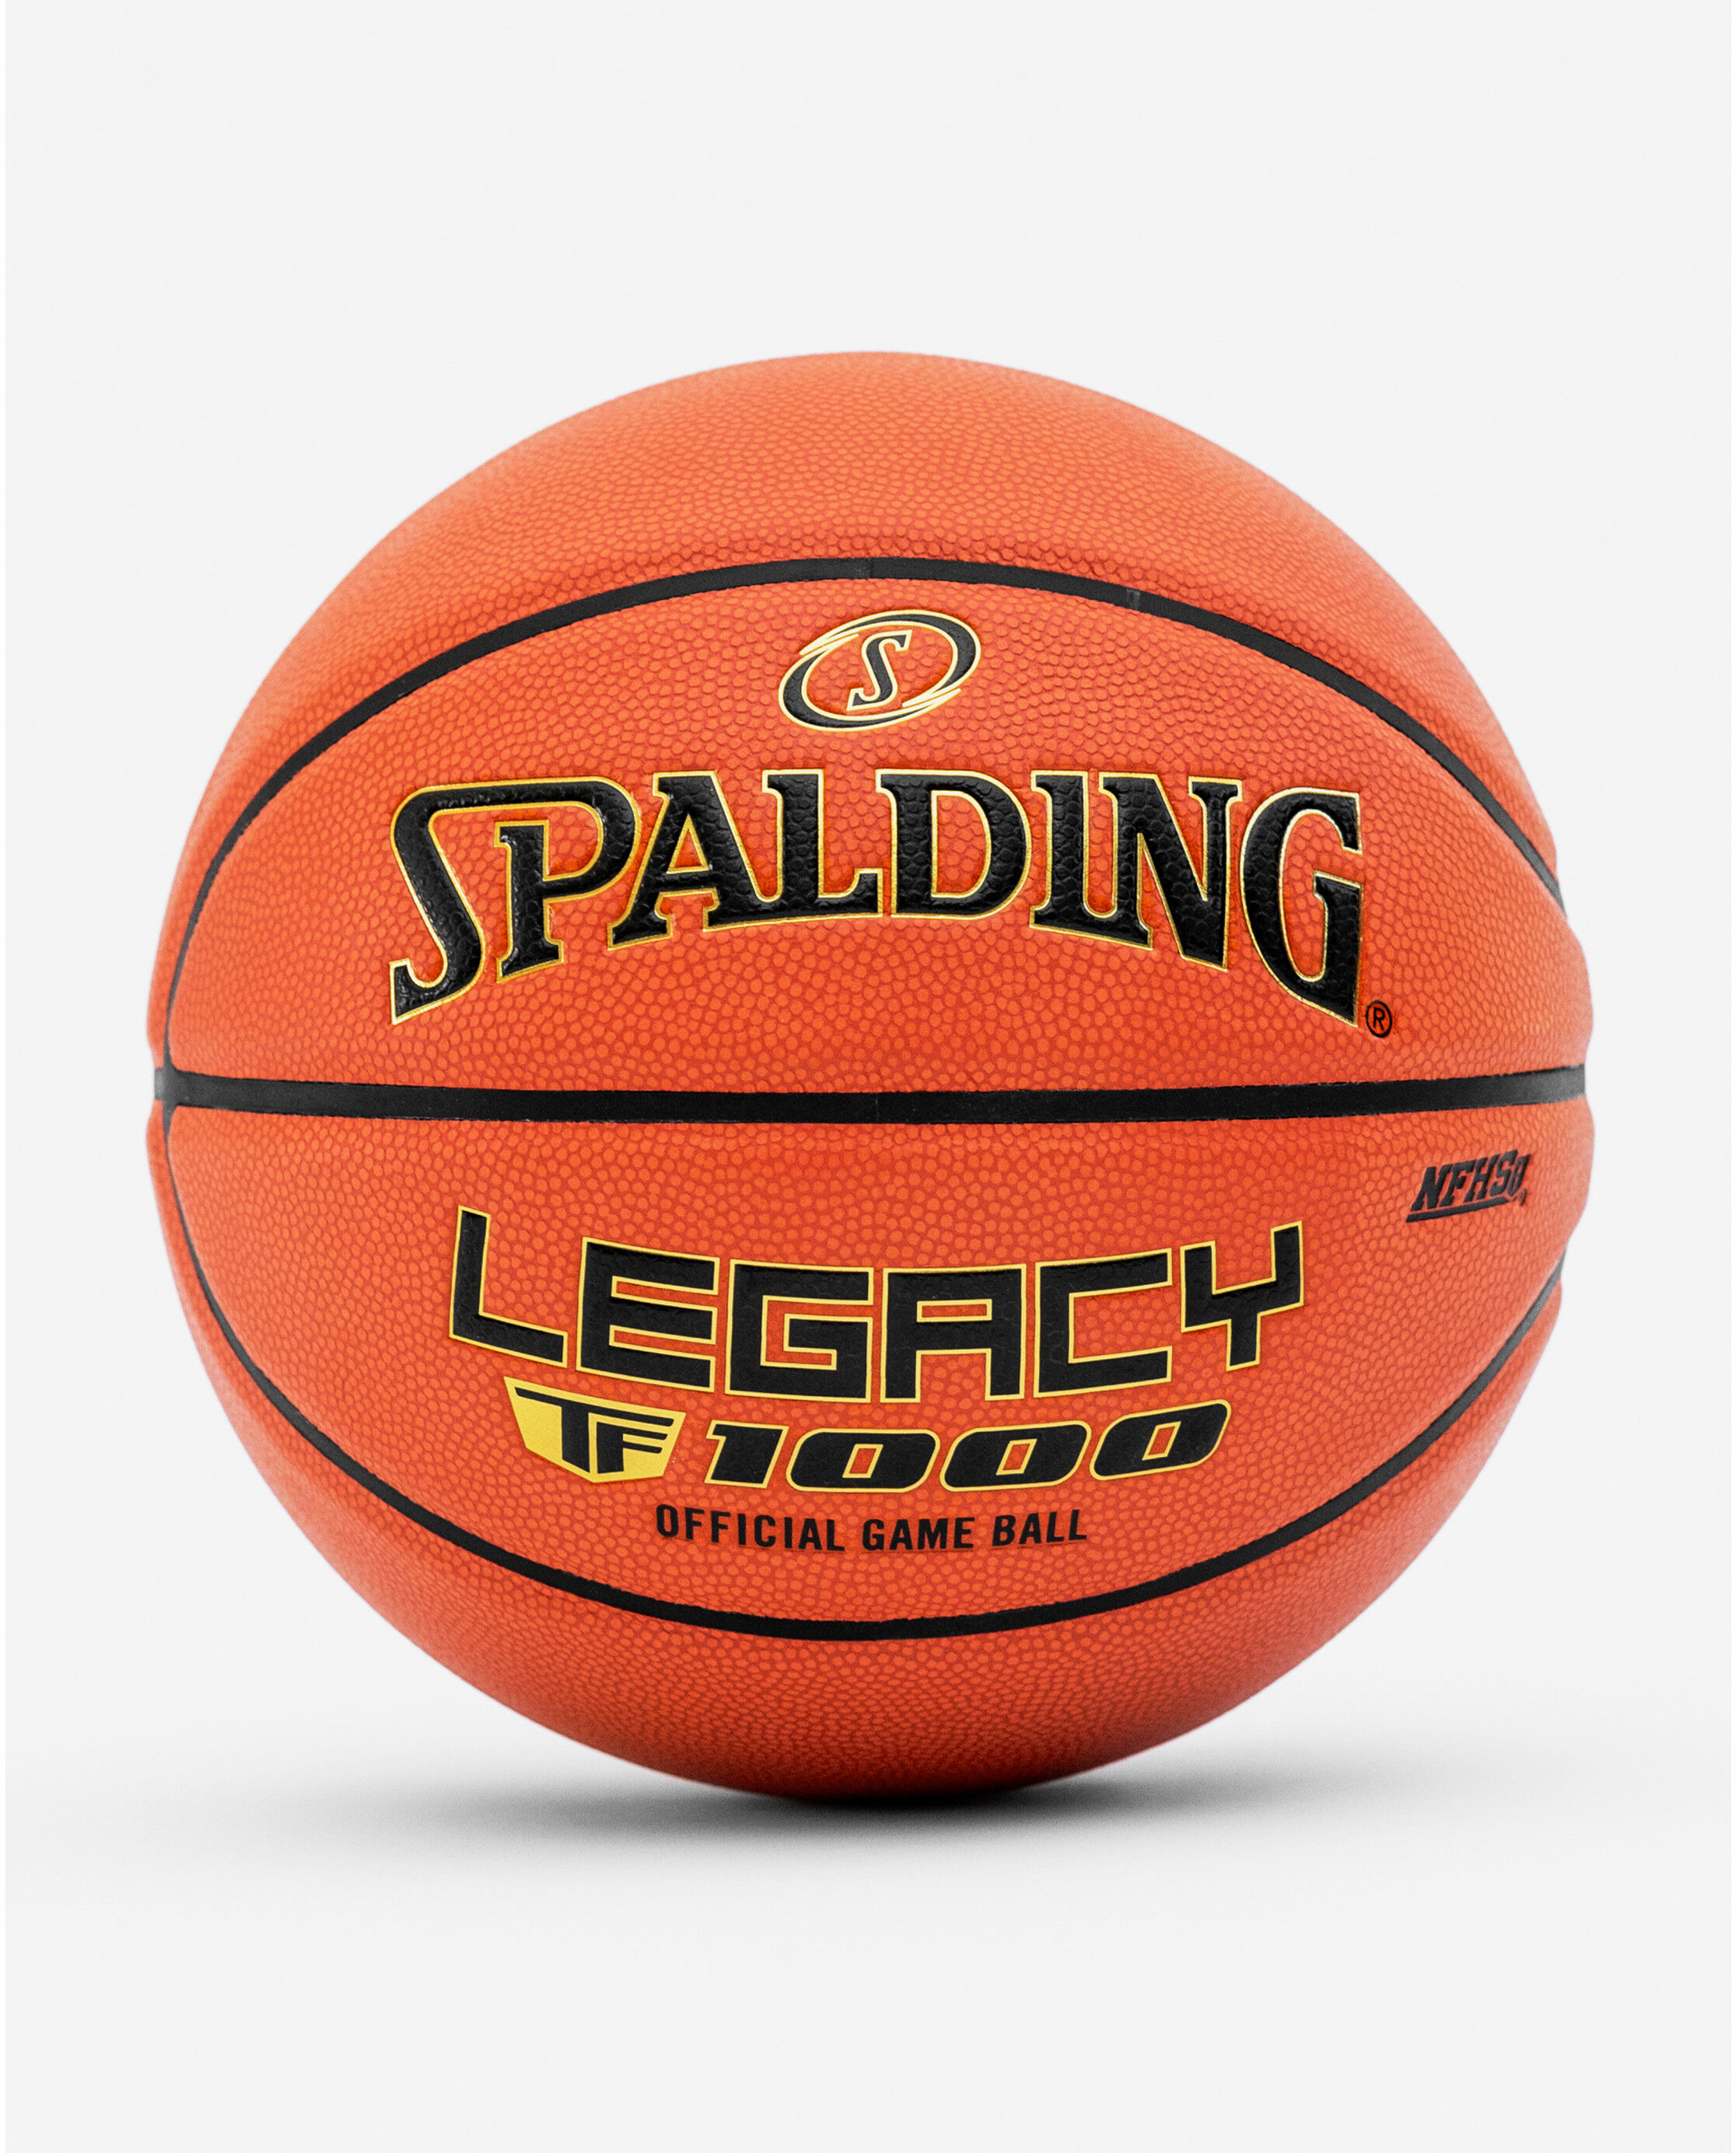 Spalding TF 1000 Legacy FIBA Basketball 